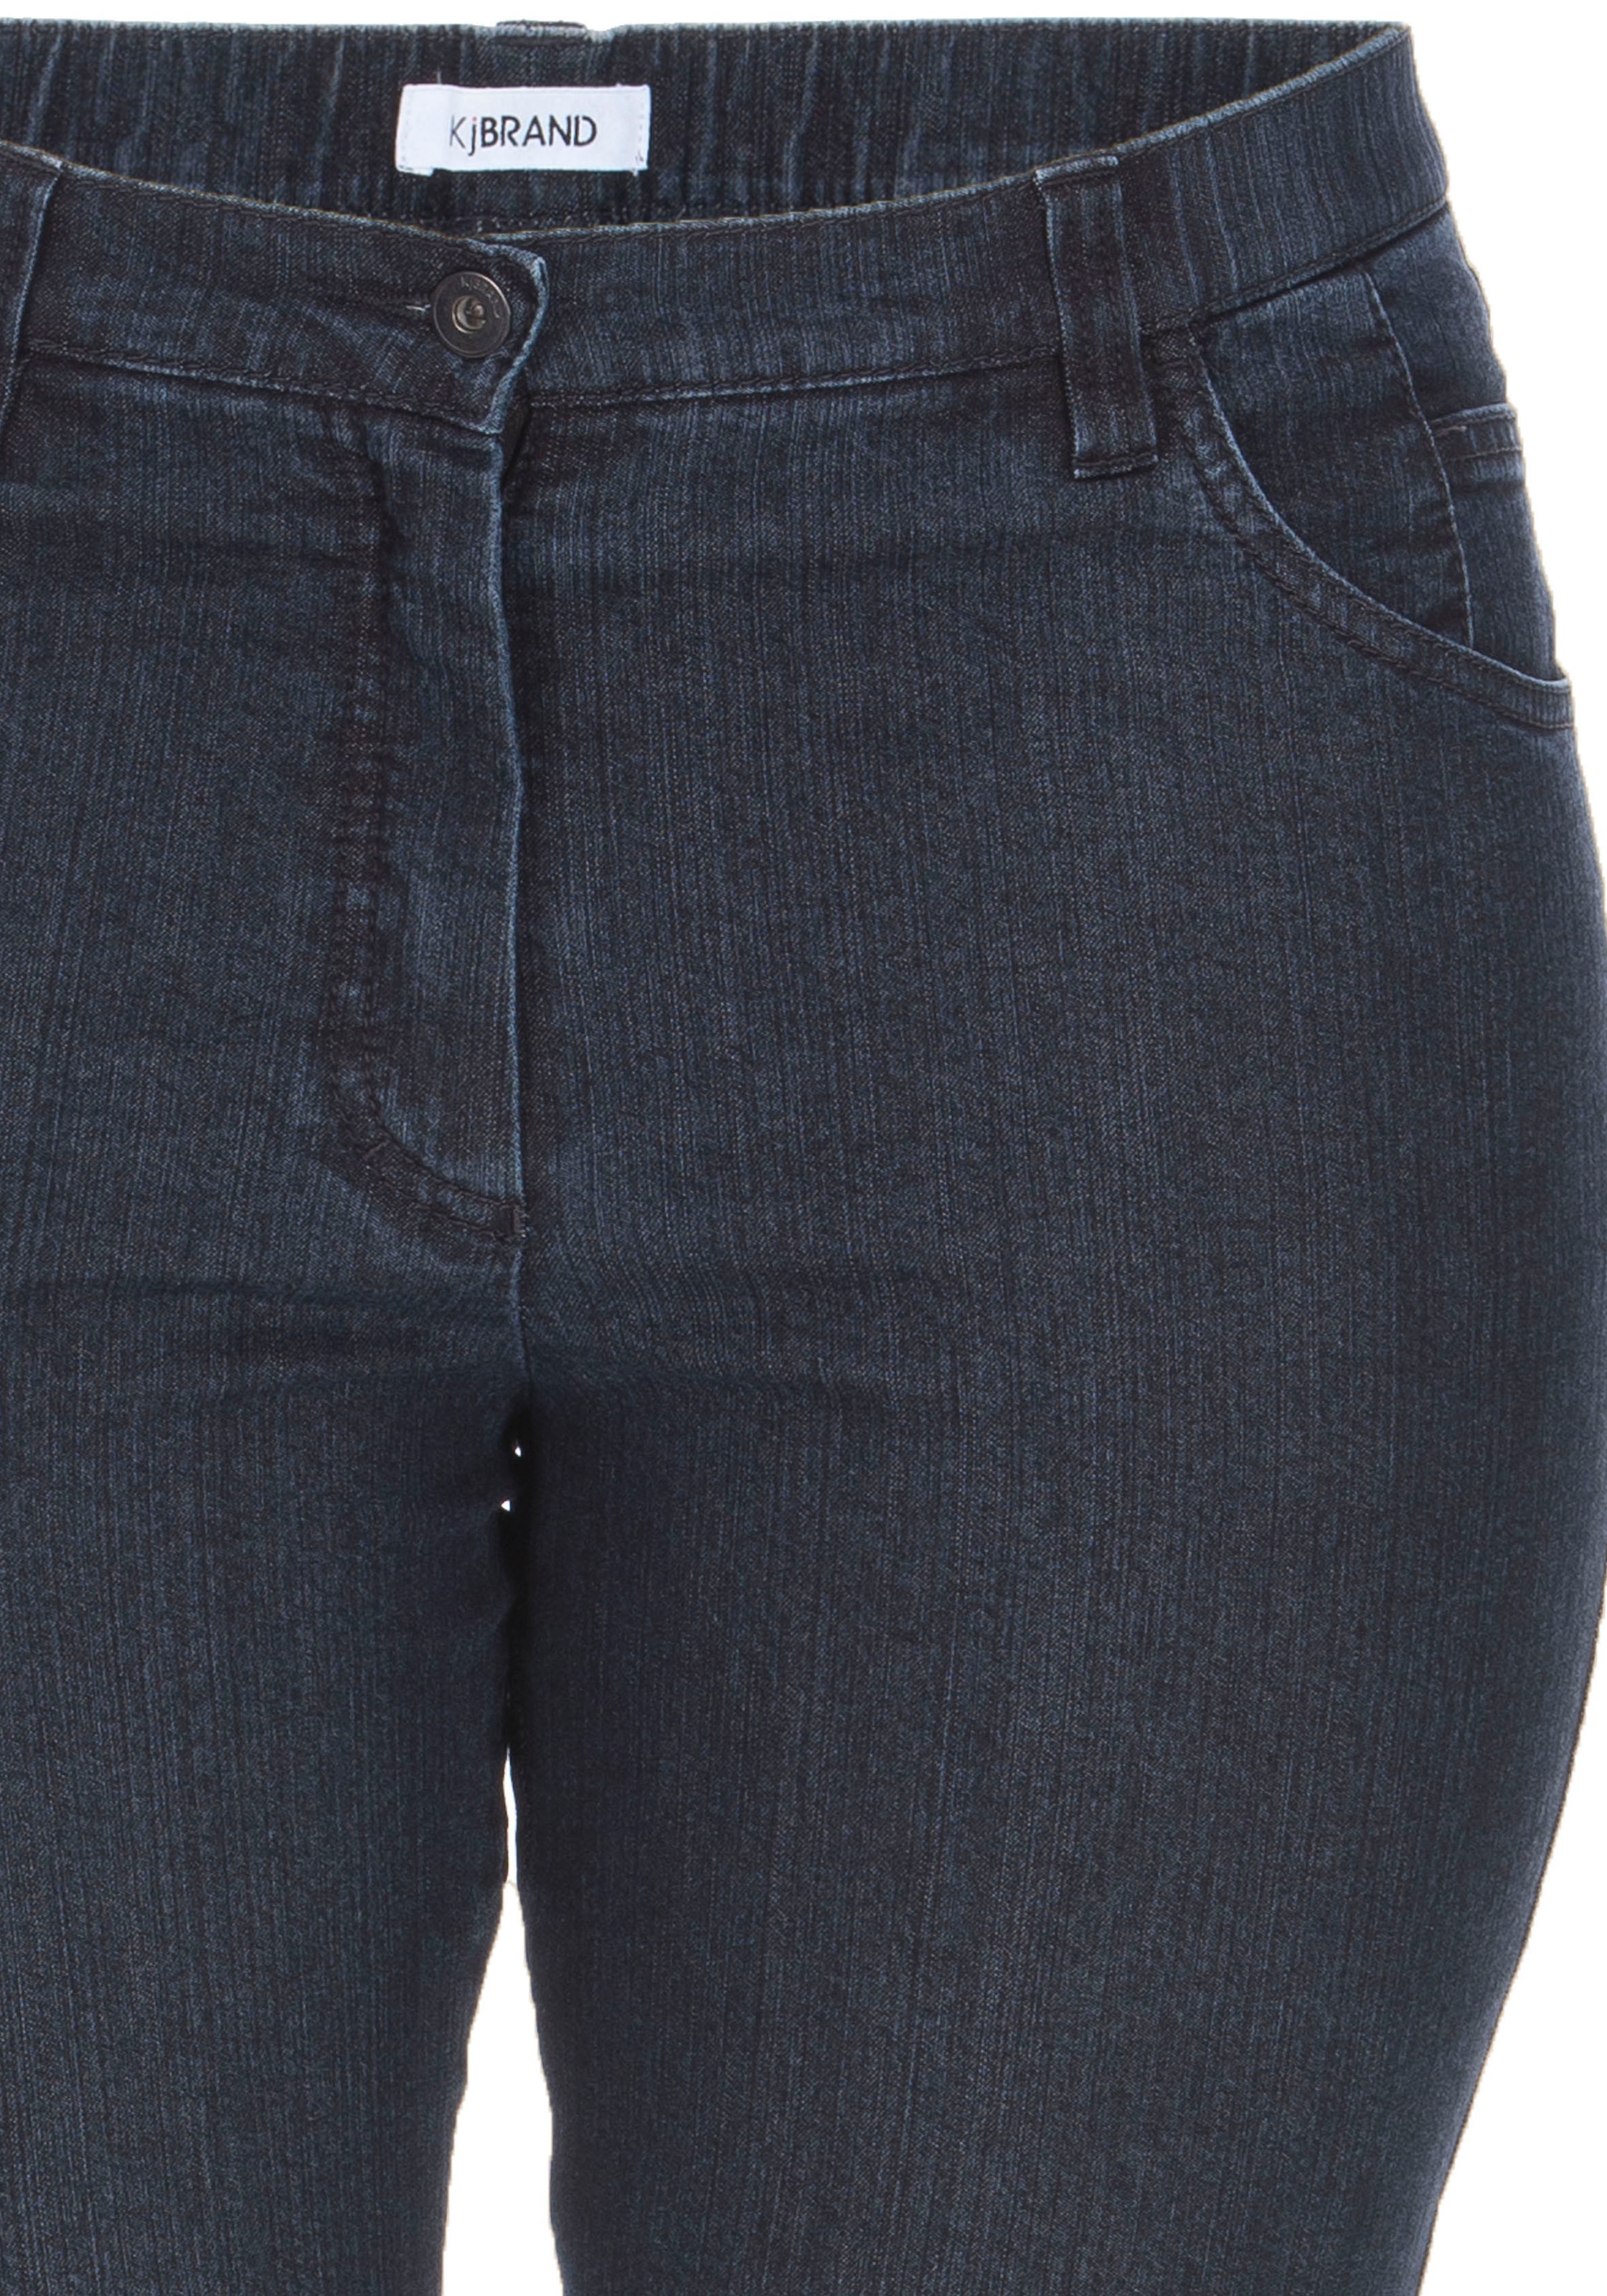 KjBRAND CS »Betty Stretch-Jeans Stretch mit shoppen Stretch«, Denim